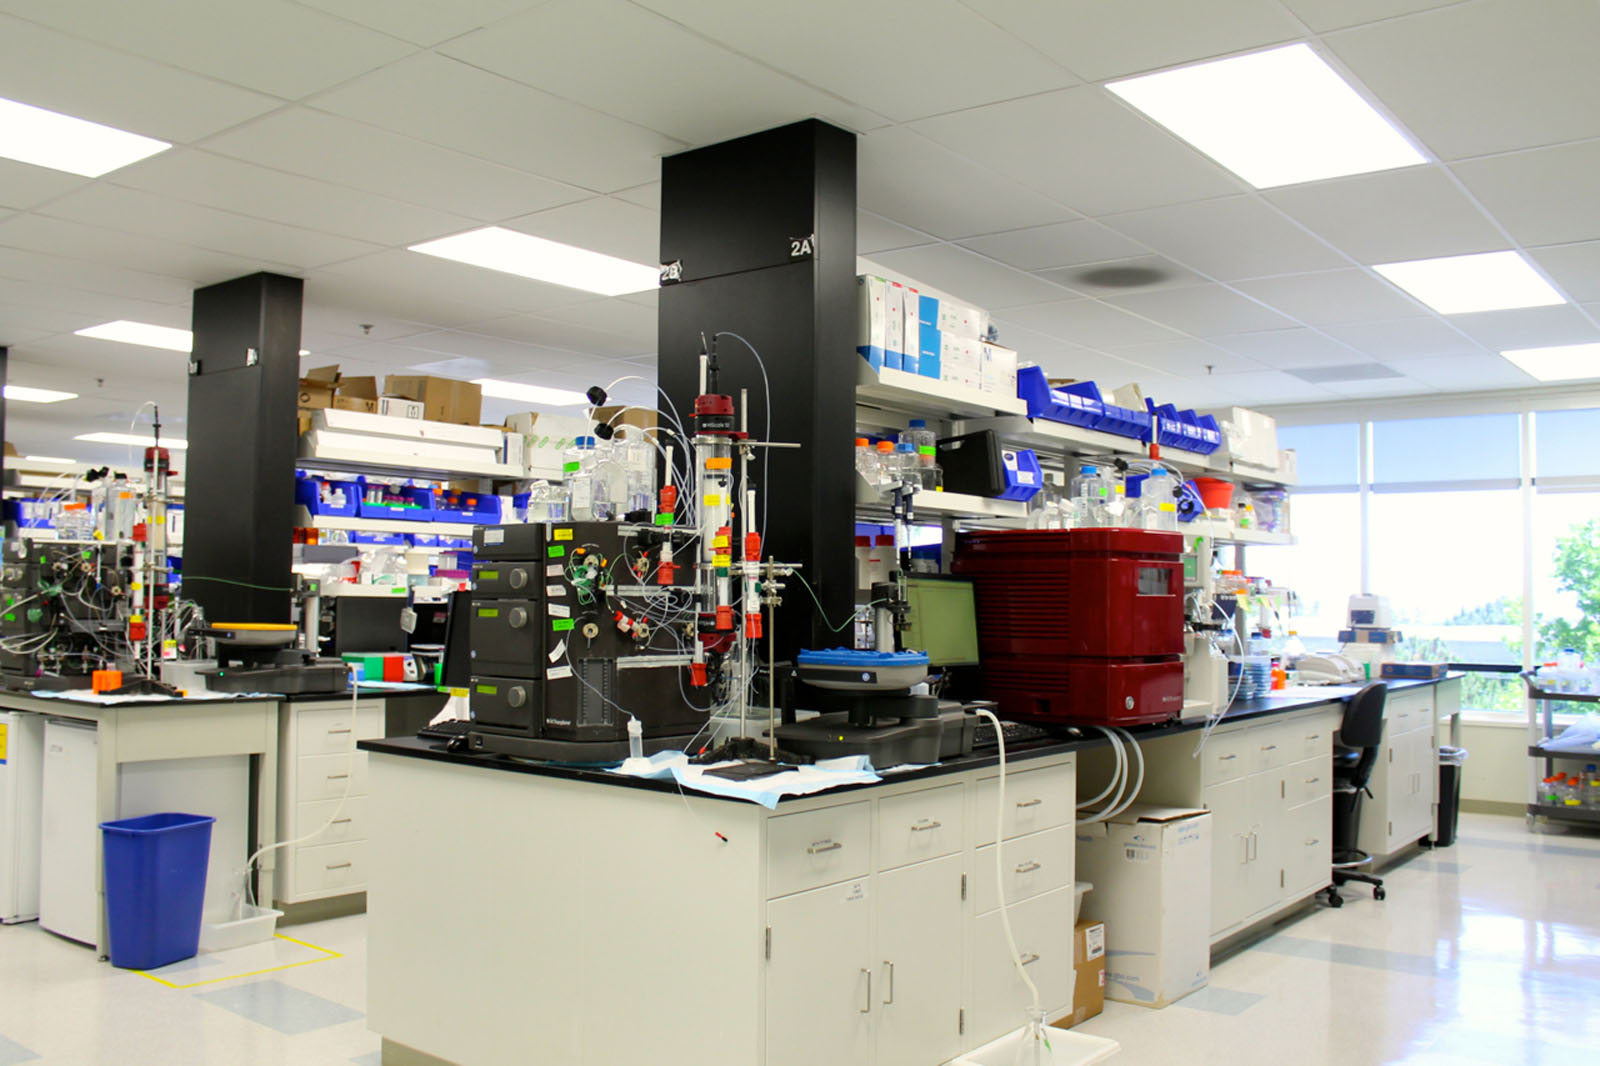 aTyr Pharma lab benches